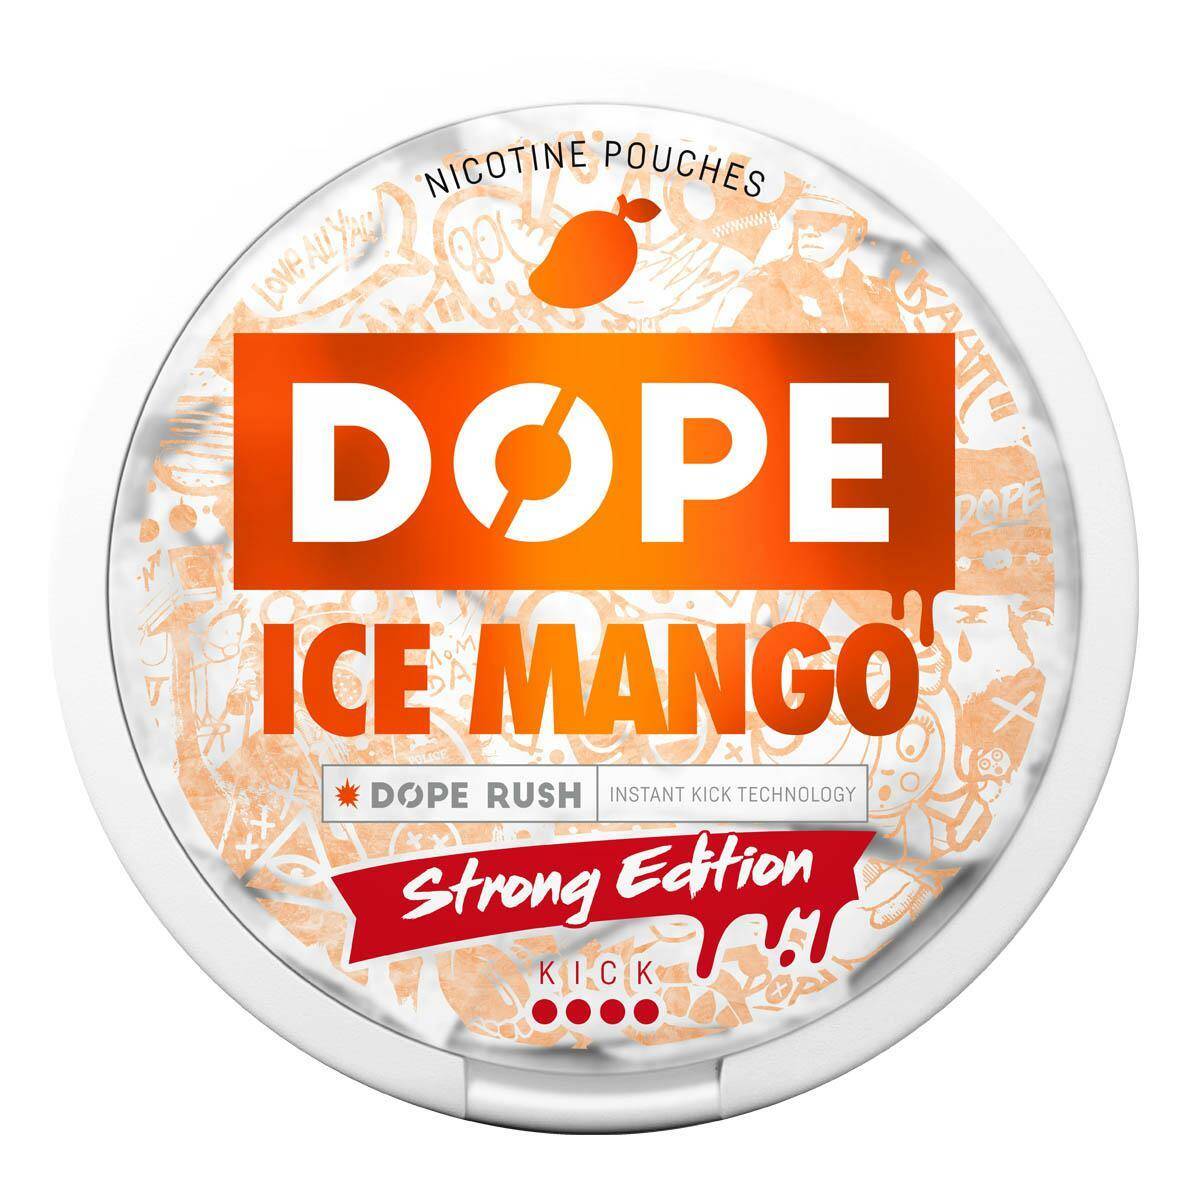 Nicotine Pouches DOPE - Ice Mango 16mg/g